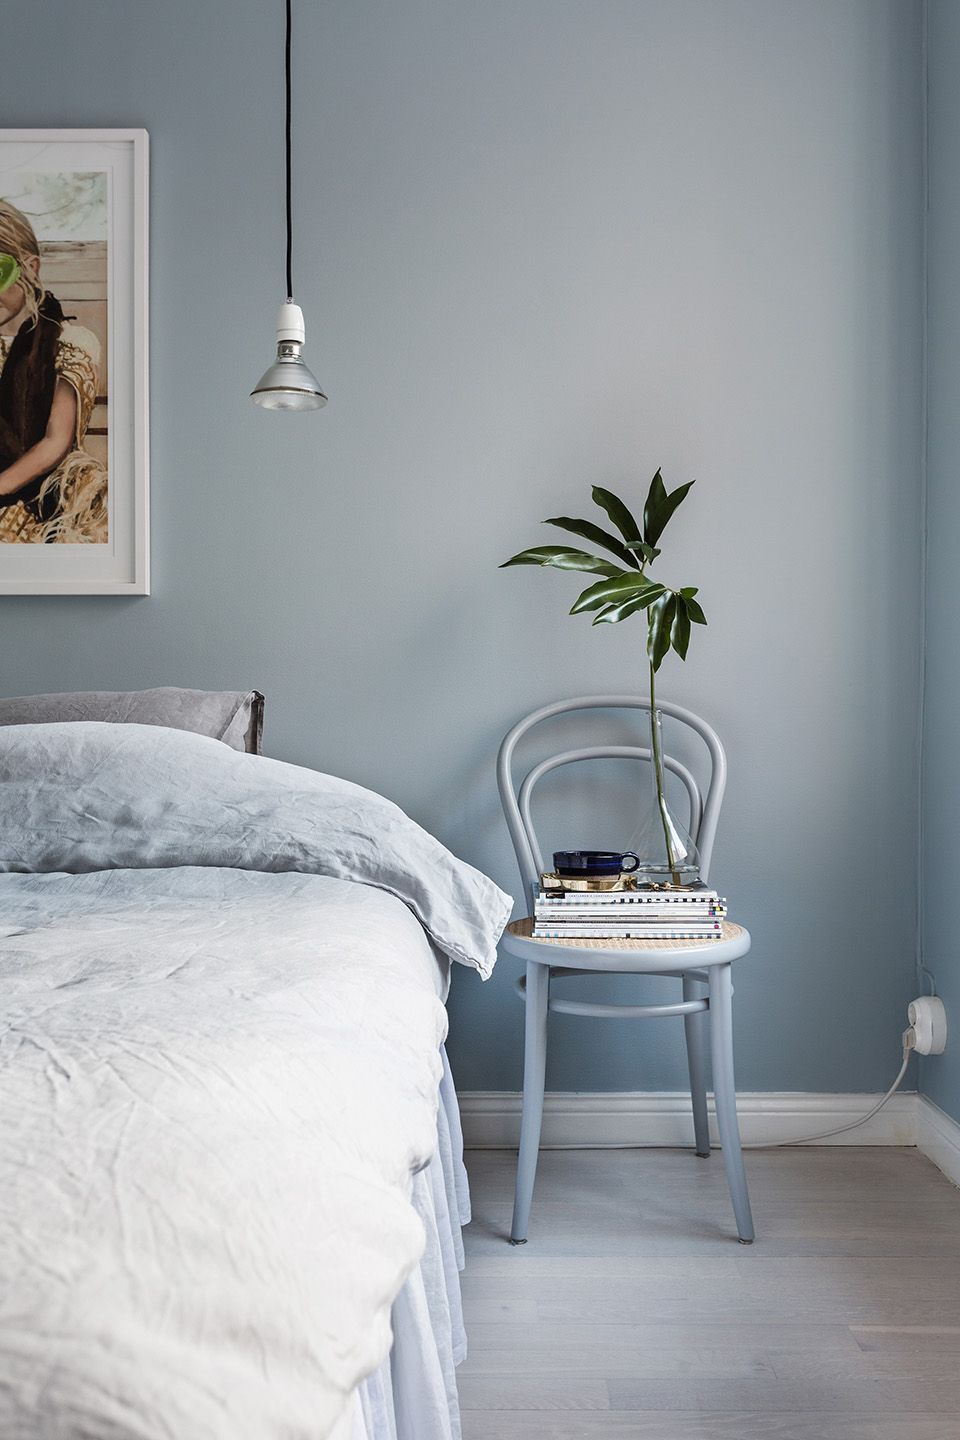 Popular teal blue bedroom ideas 40 Best Blue Rooms Decor Ideas For Light And Dark